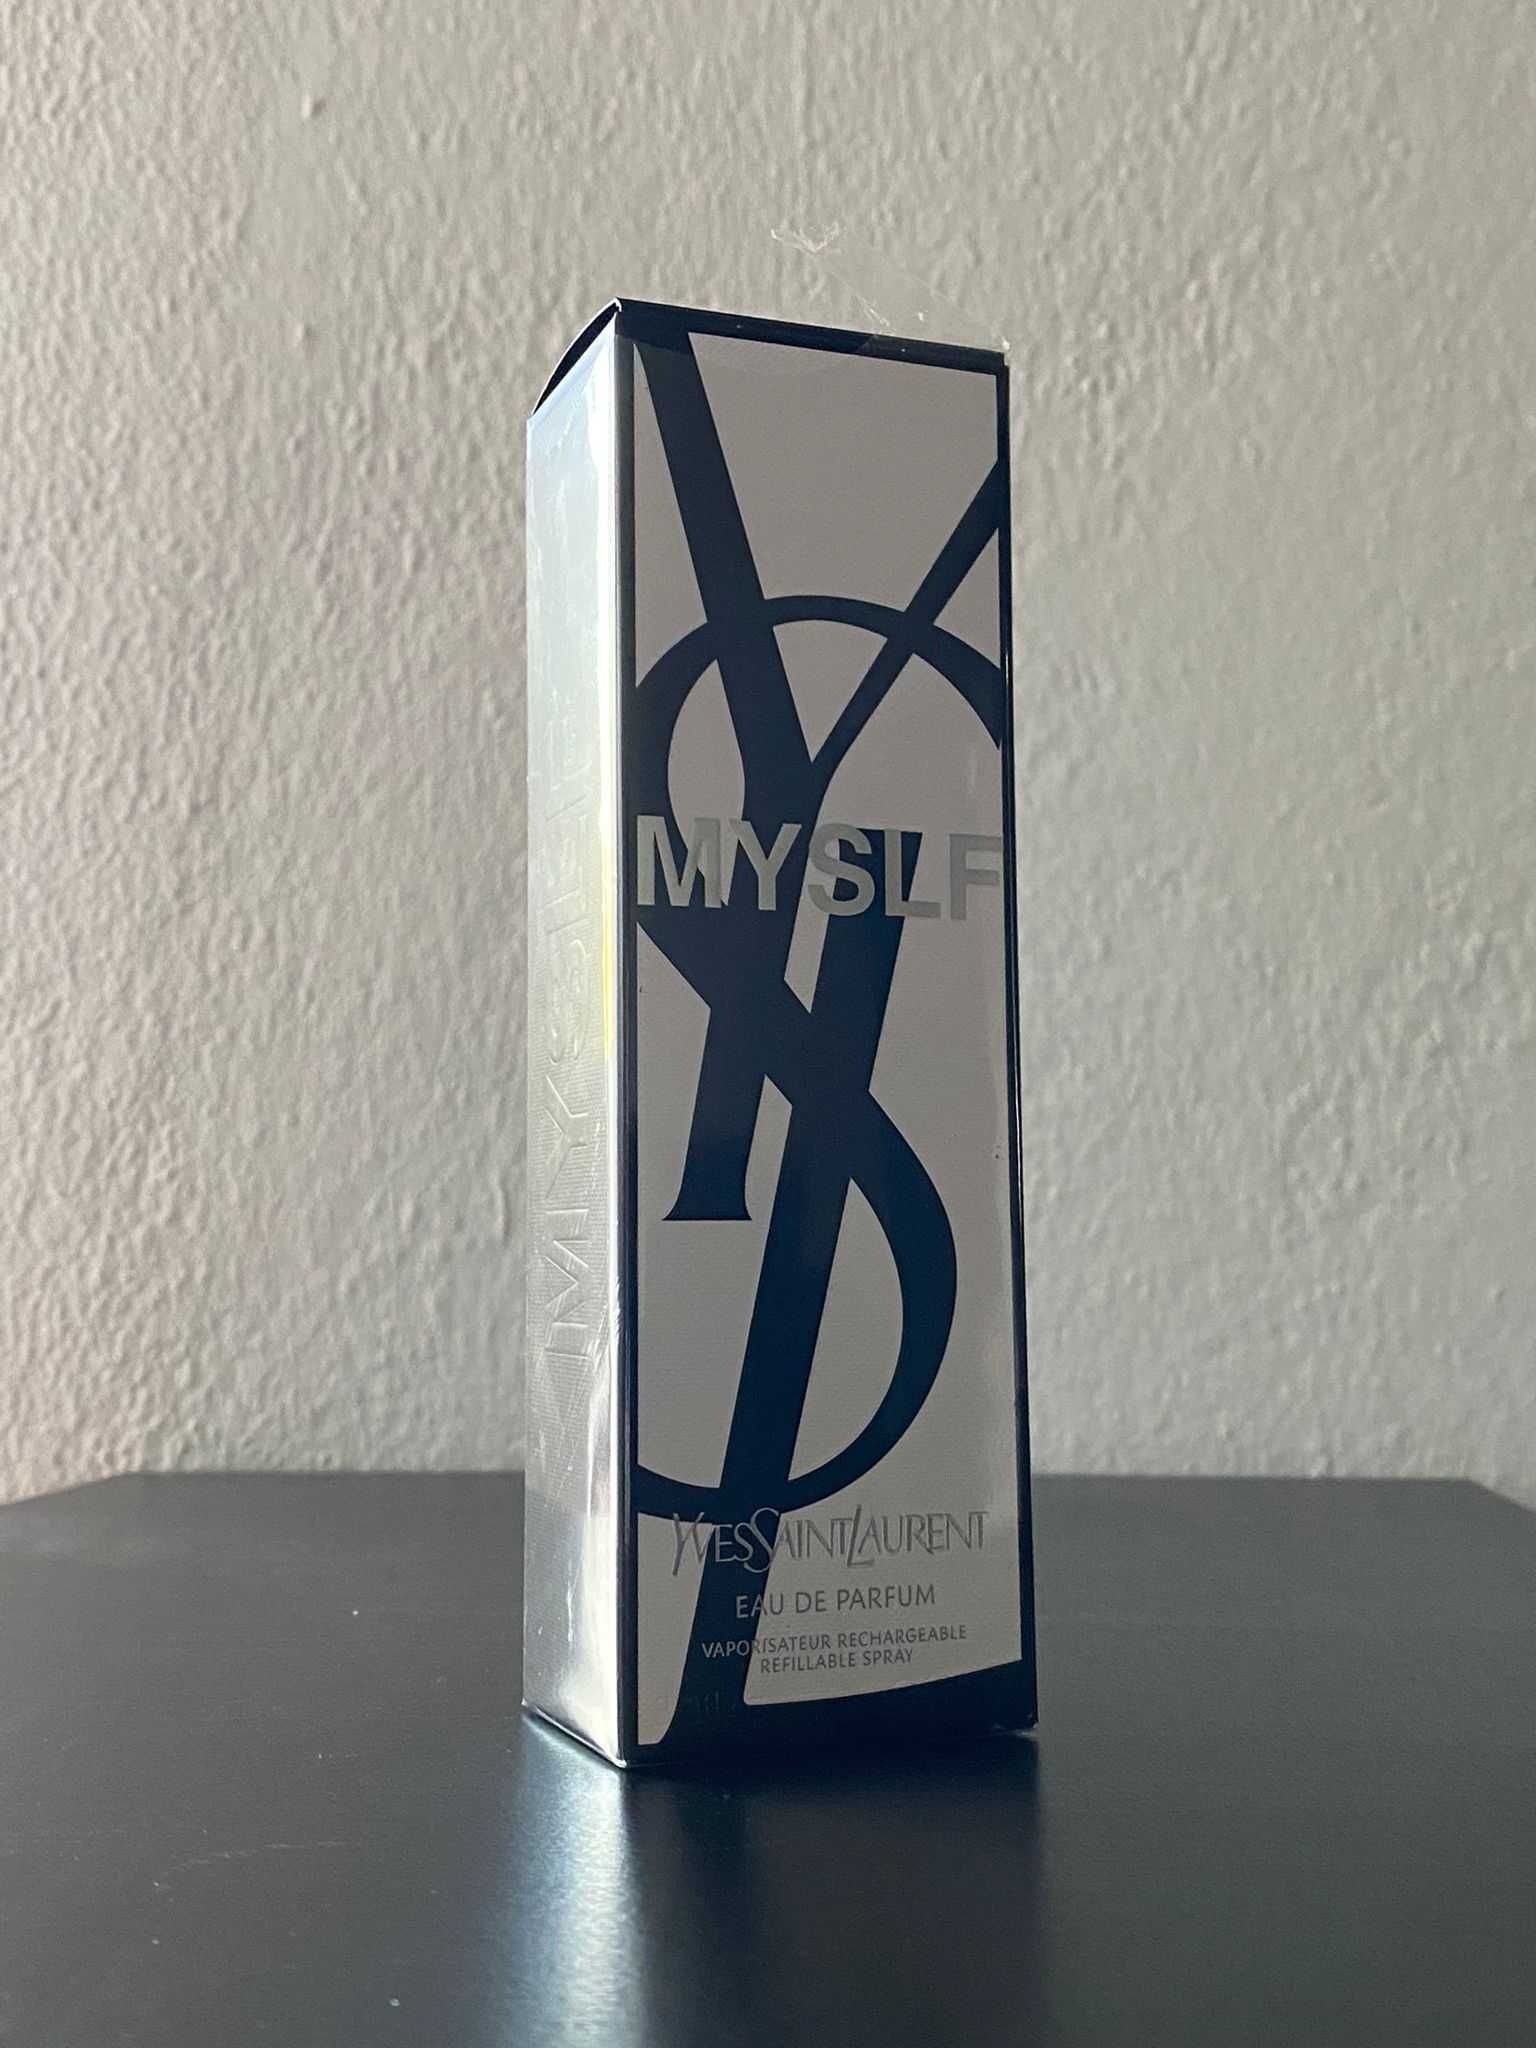 Perfume - MSYLF Yves Saint Laurent - NOVO